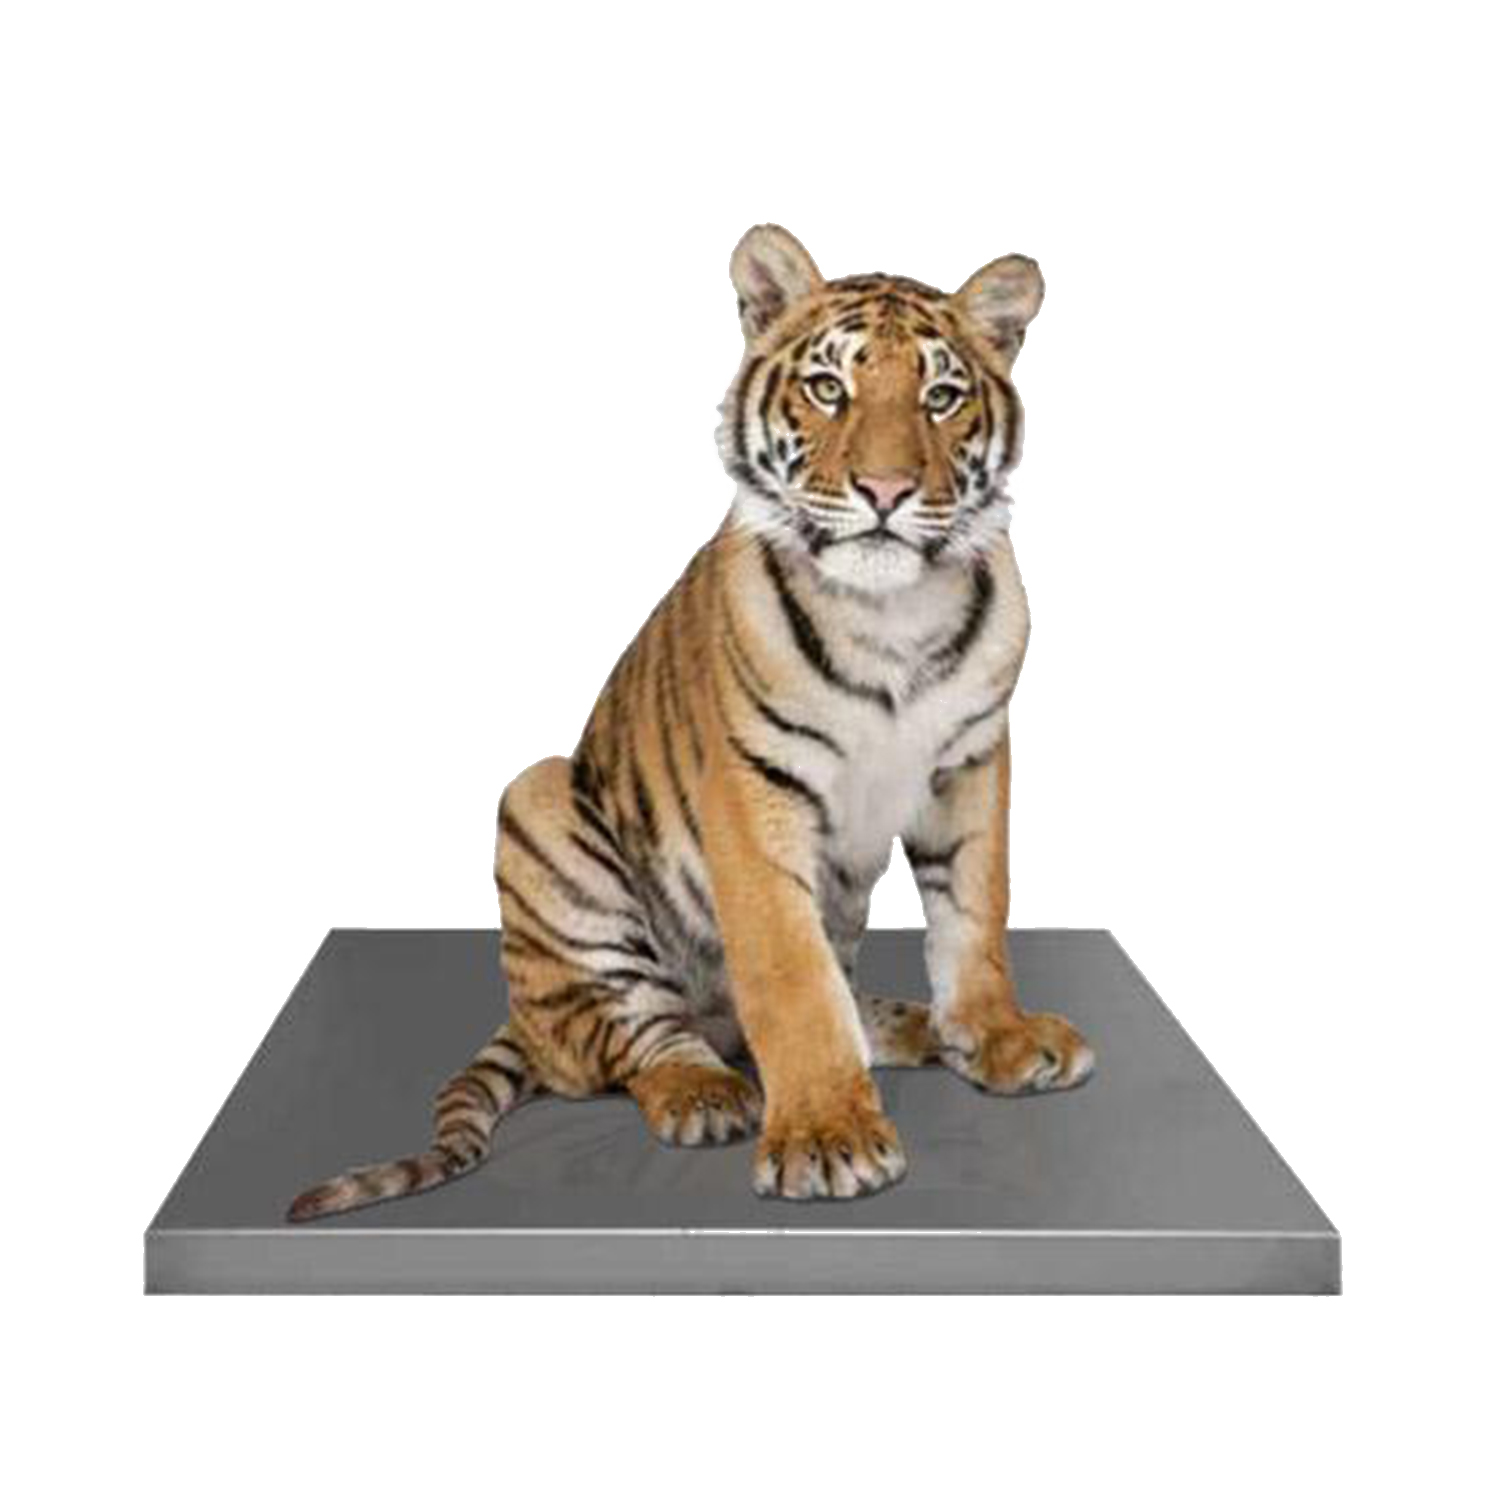 Avante Zoological Platform Scales: Multiple Models